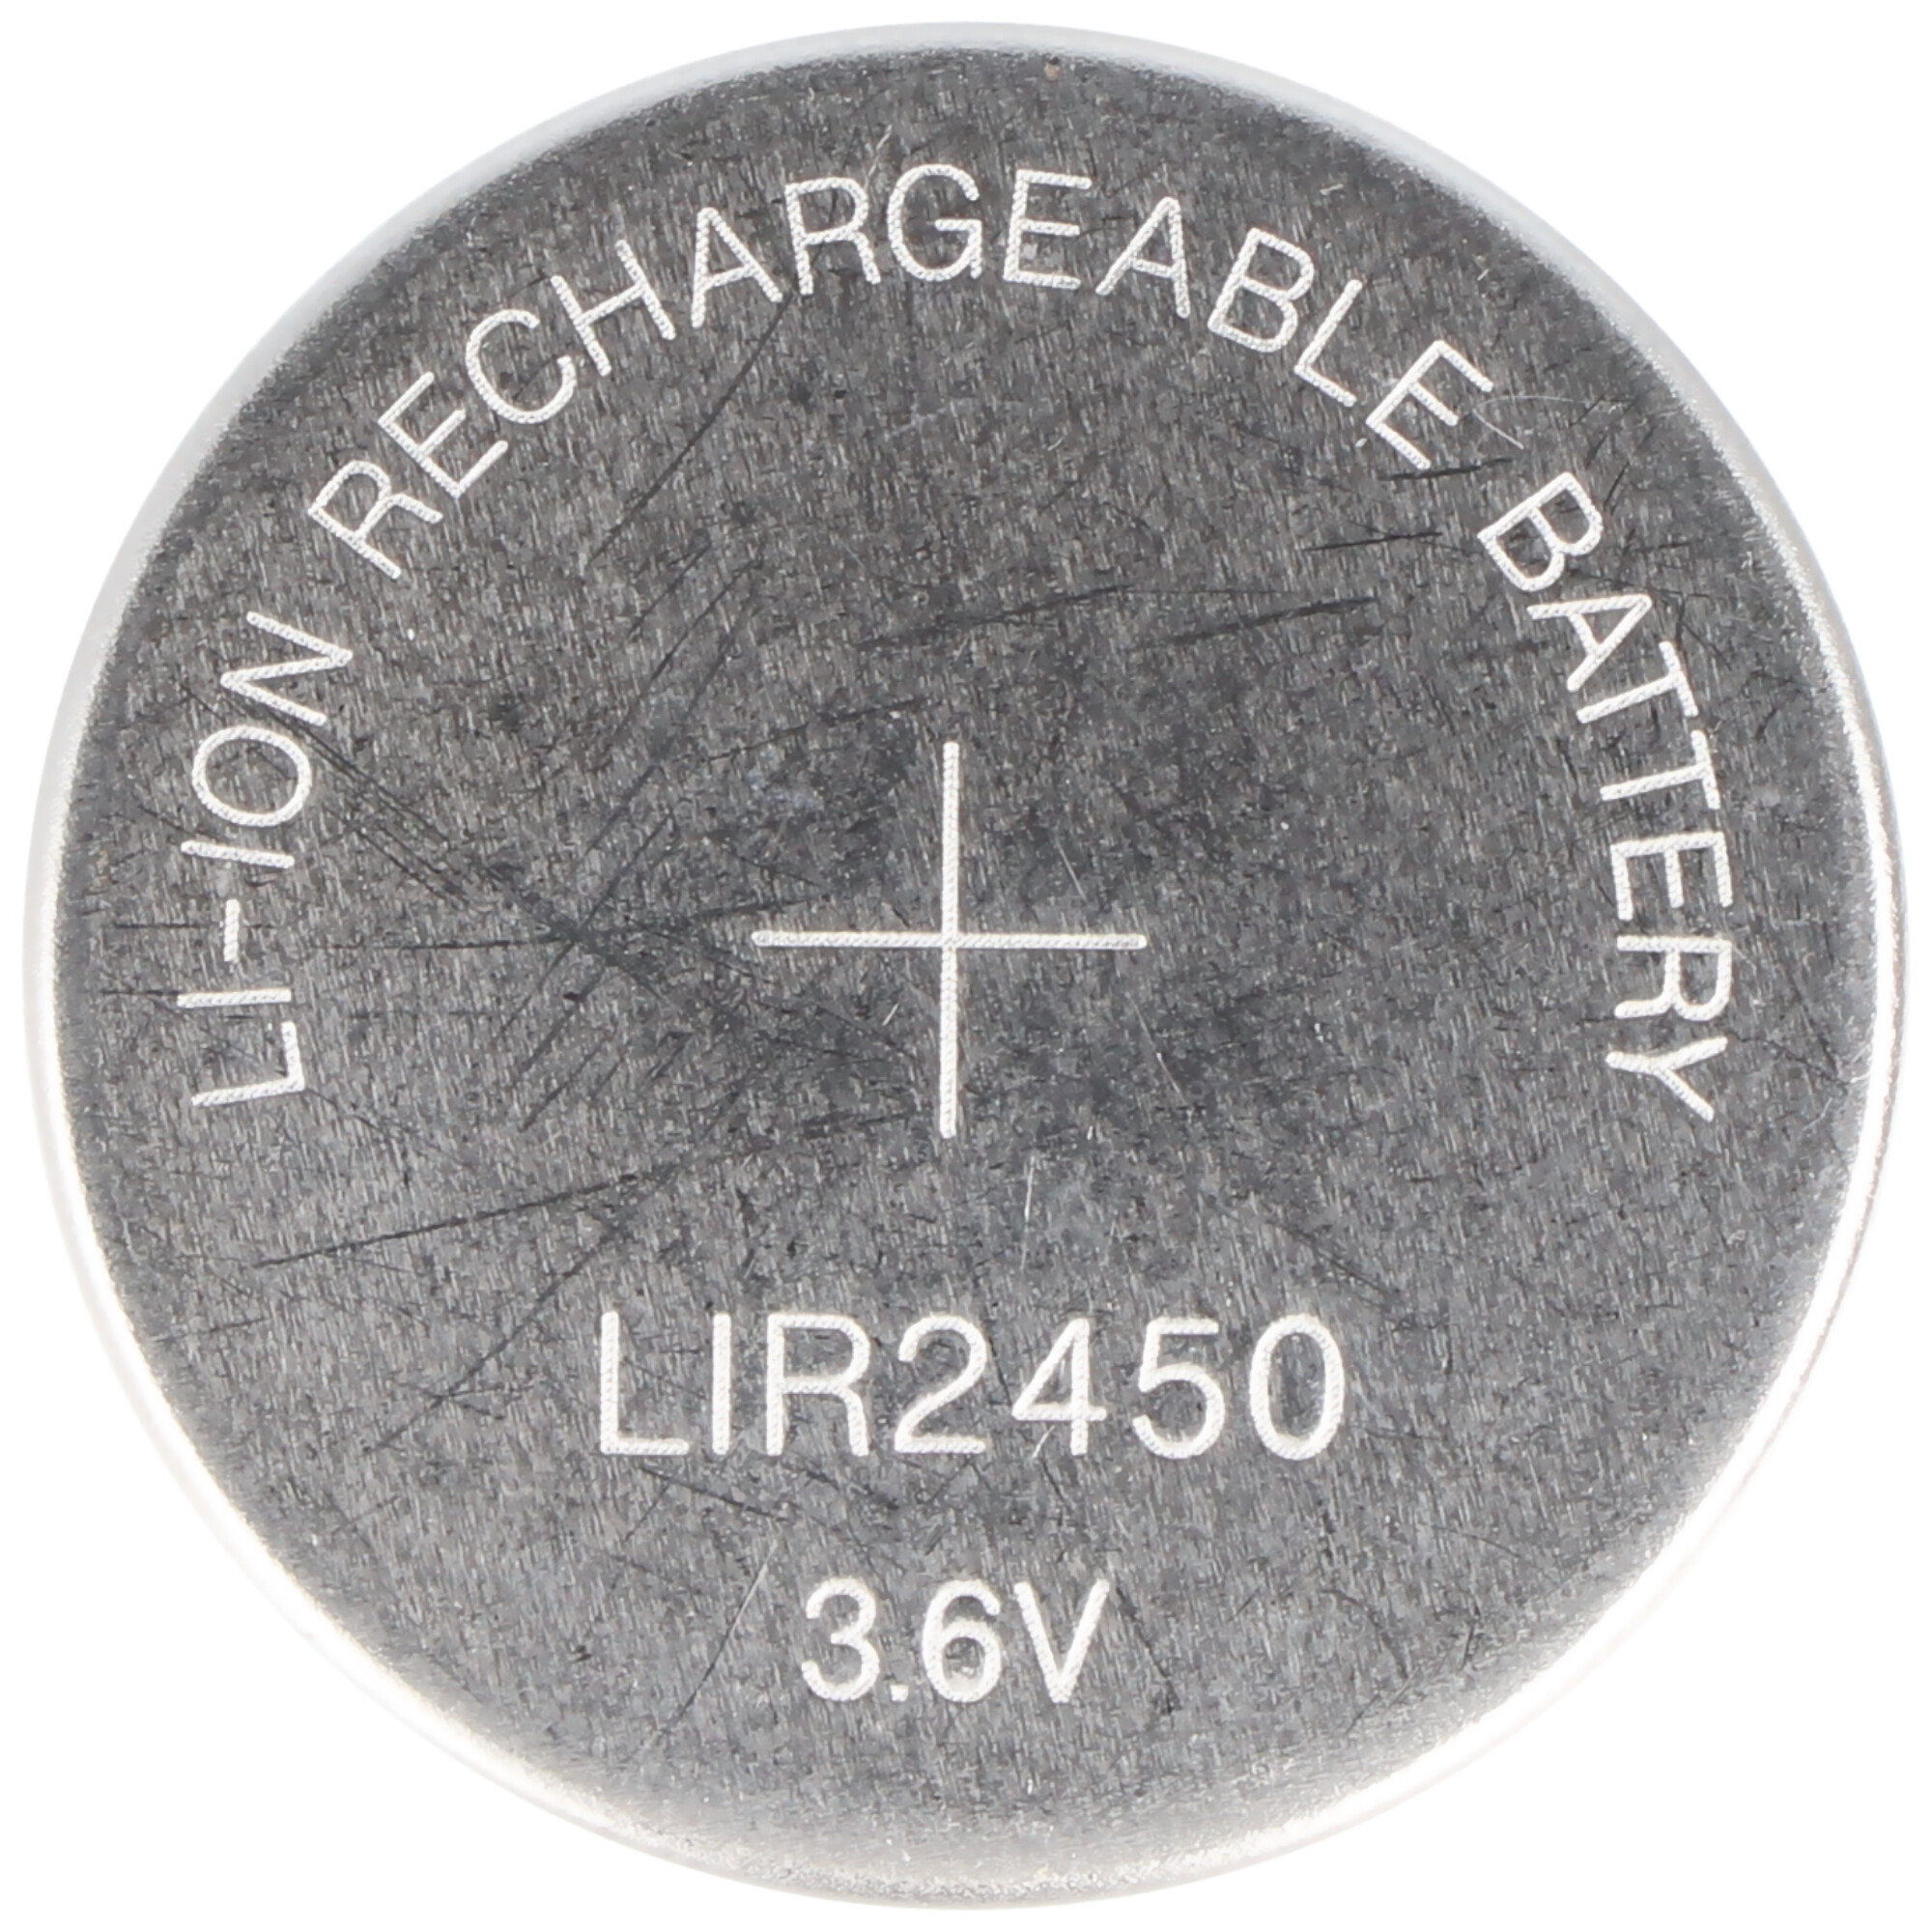 LIR2450 der wiederaufladbare Li-Ion Akku mit max. 120mAh Kapazität, 3.6 Volt 0,43Wh